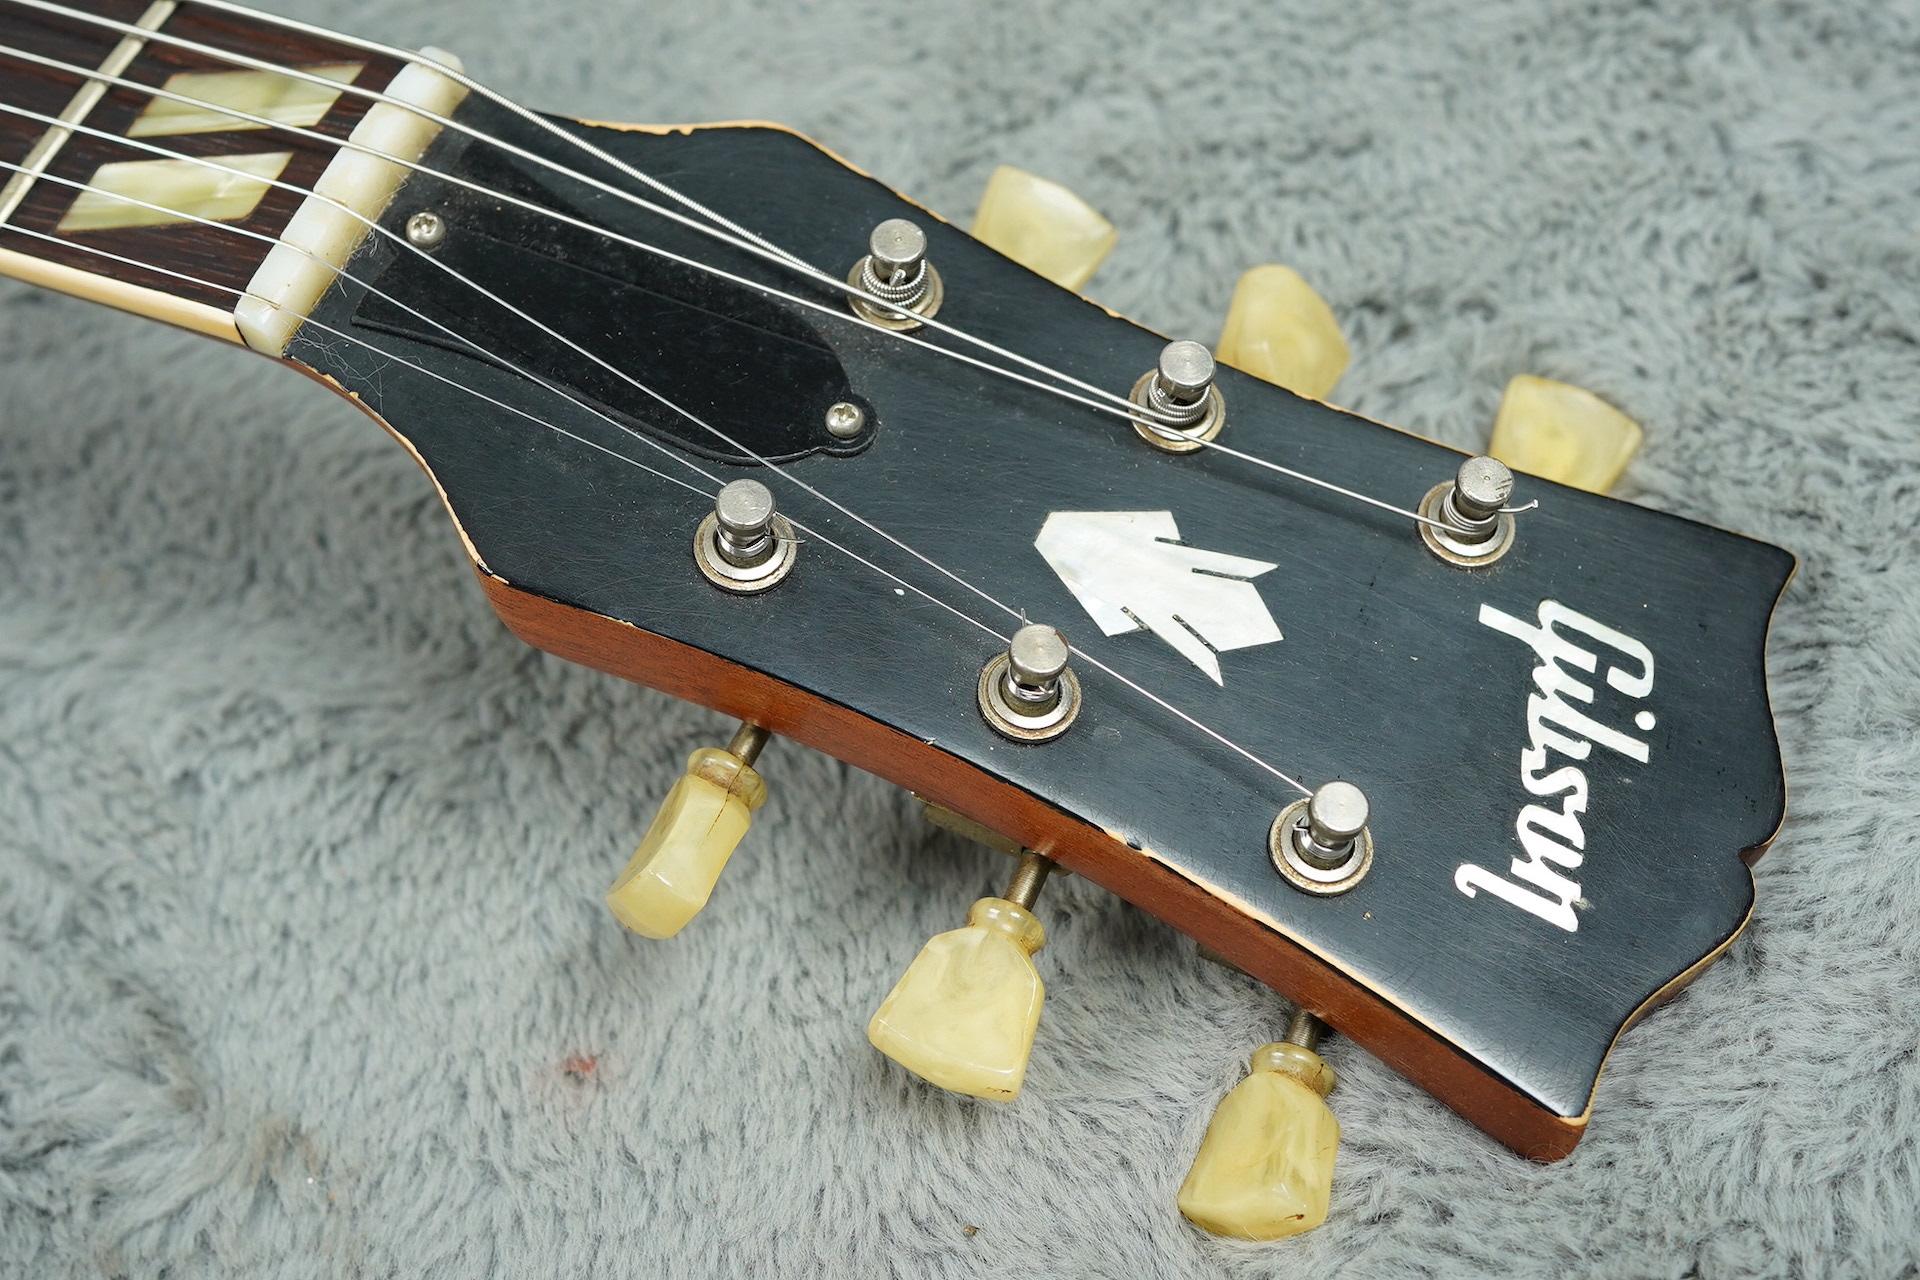 1955 Gibson ES-175DN